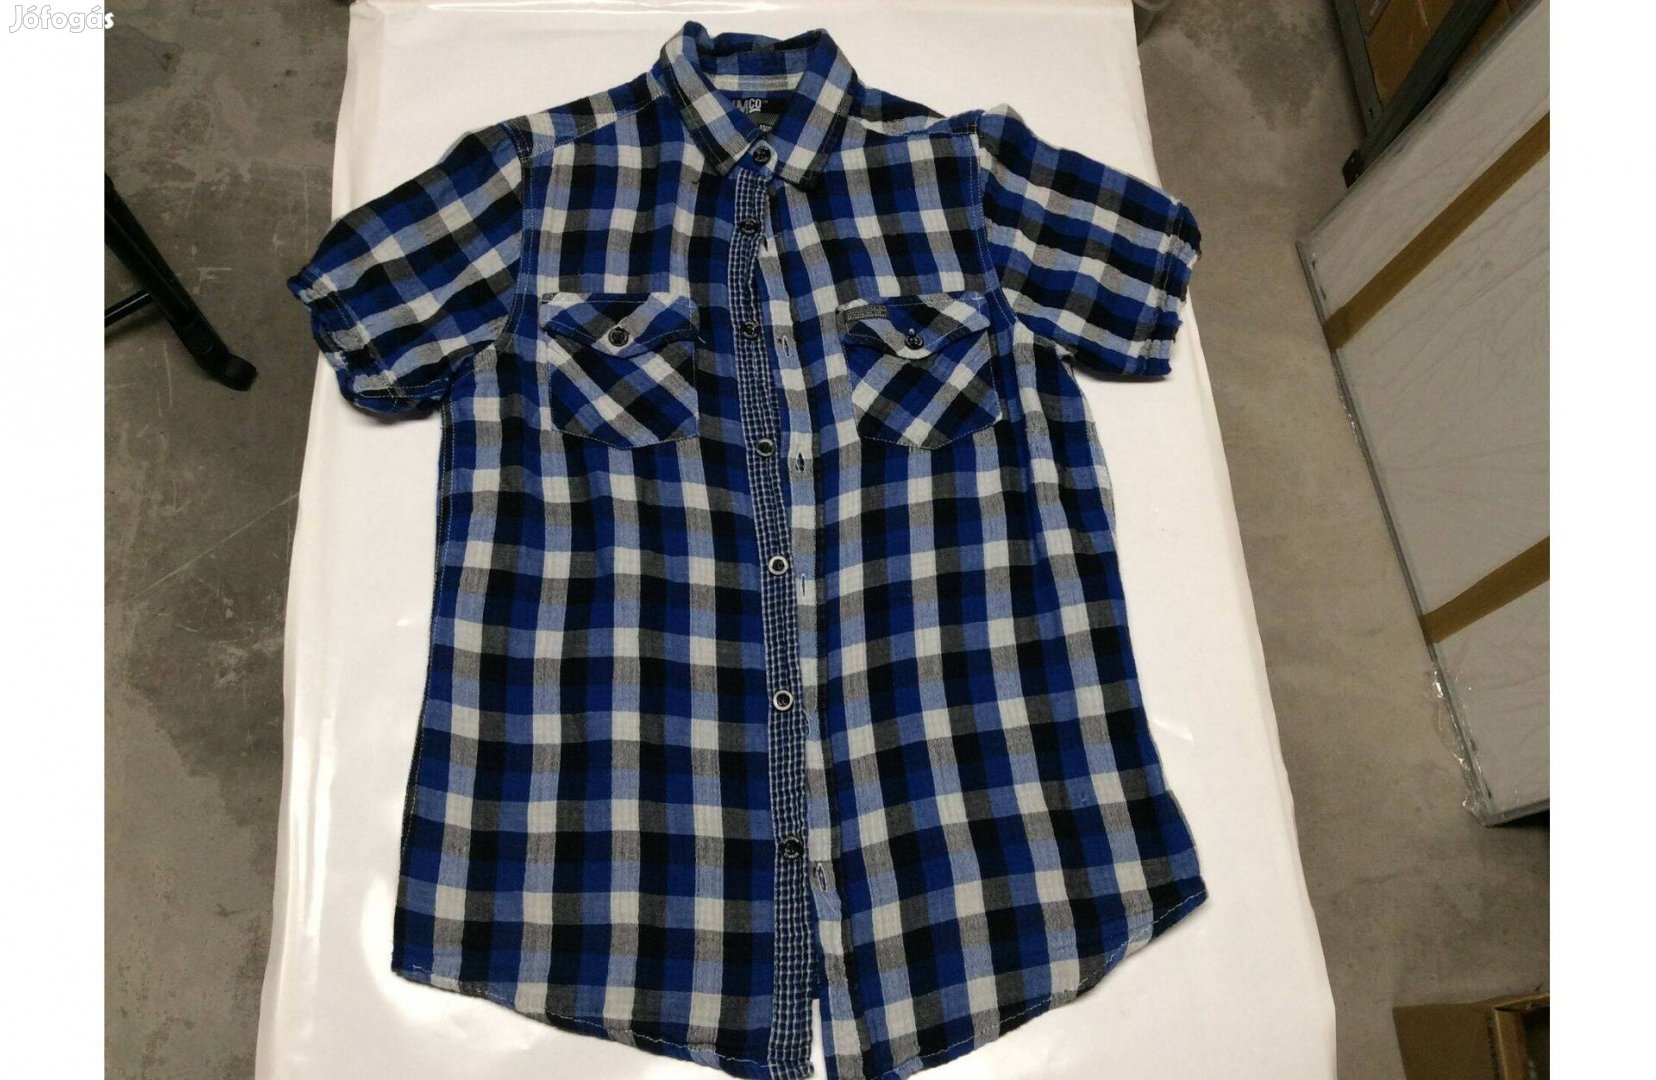 S-es Denimco fiú ing rövid ujjú ing jó anyagú kék fekete kockás ing